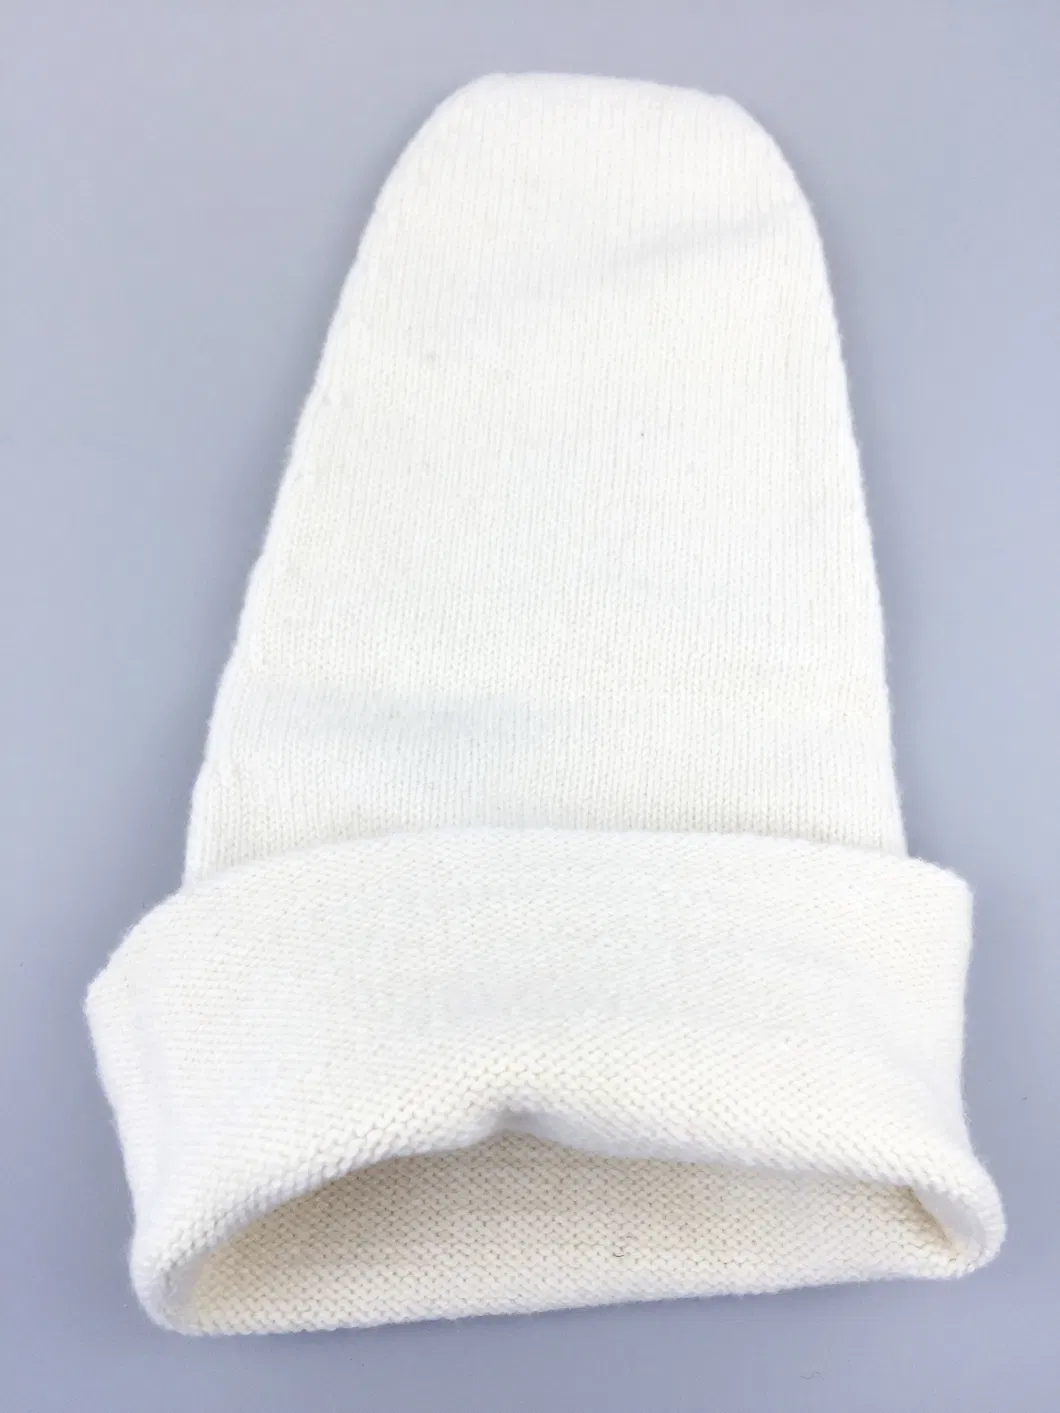 Orthotics and Prosthetic Foot Wool Cosmetics Sock